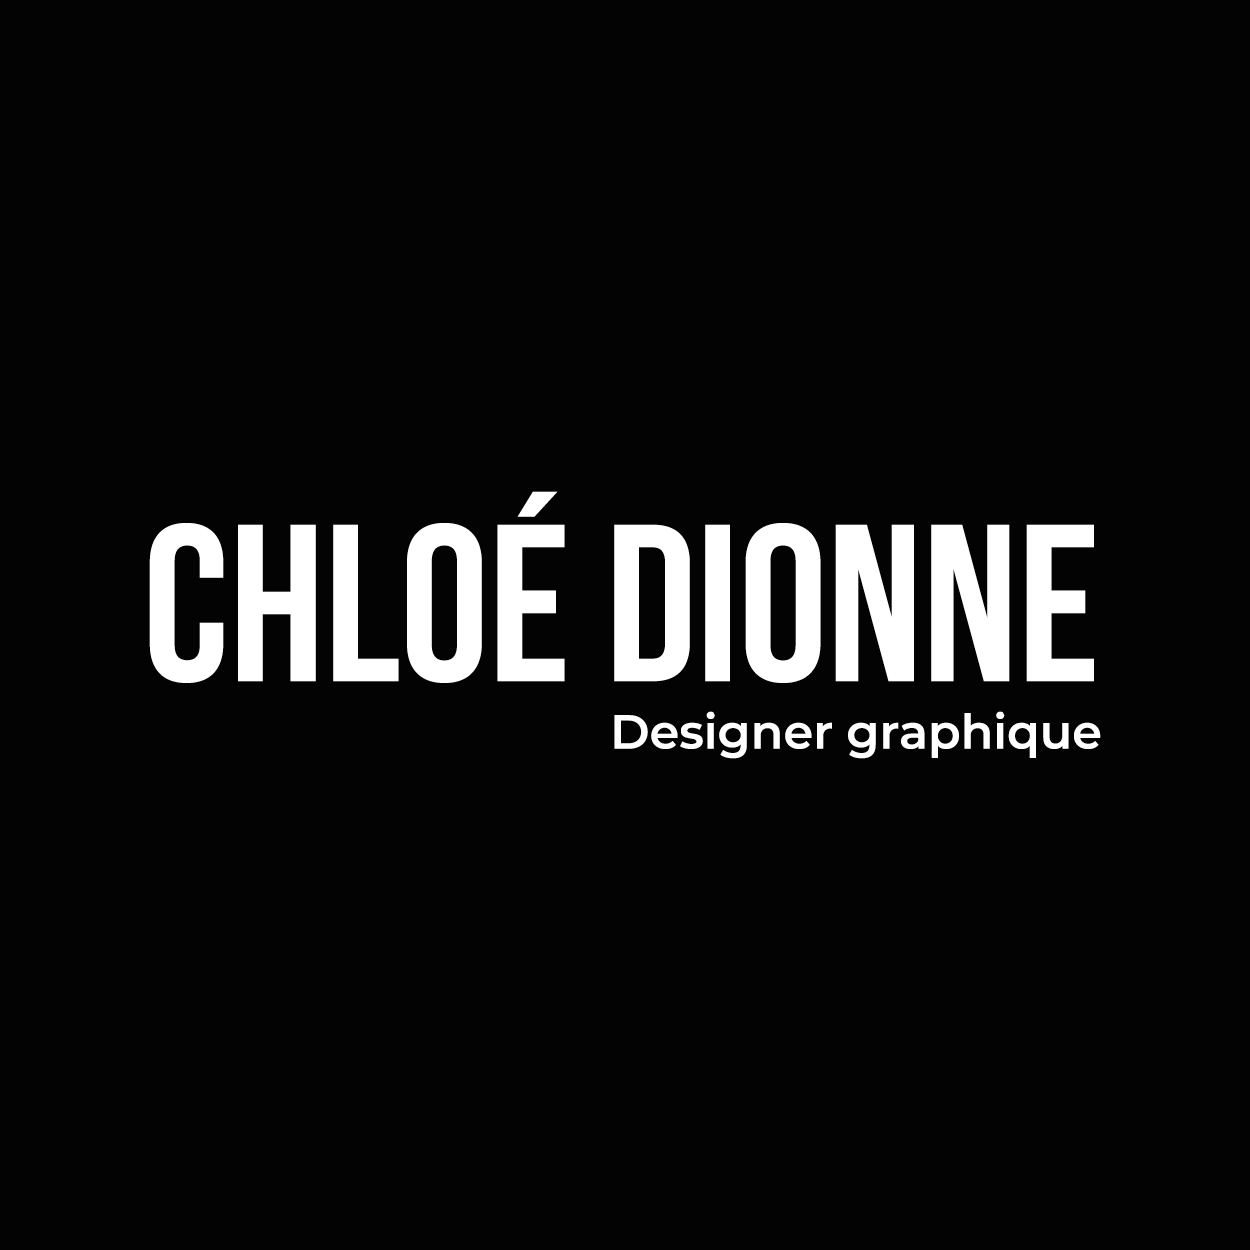 Chloé Dionne